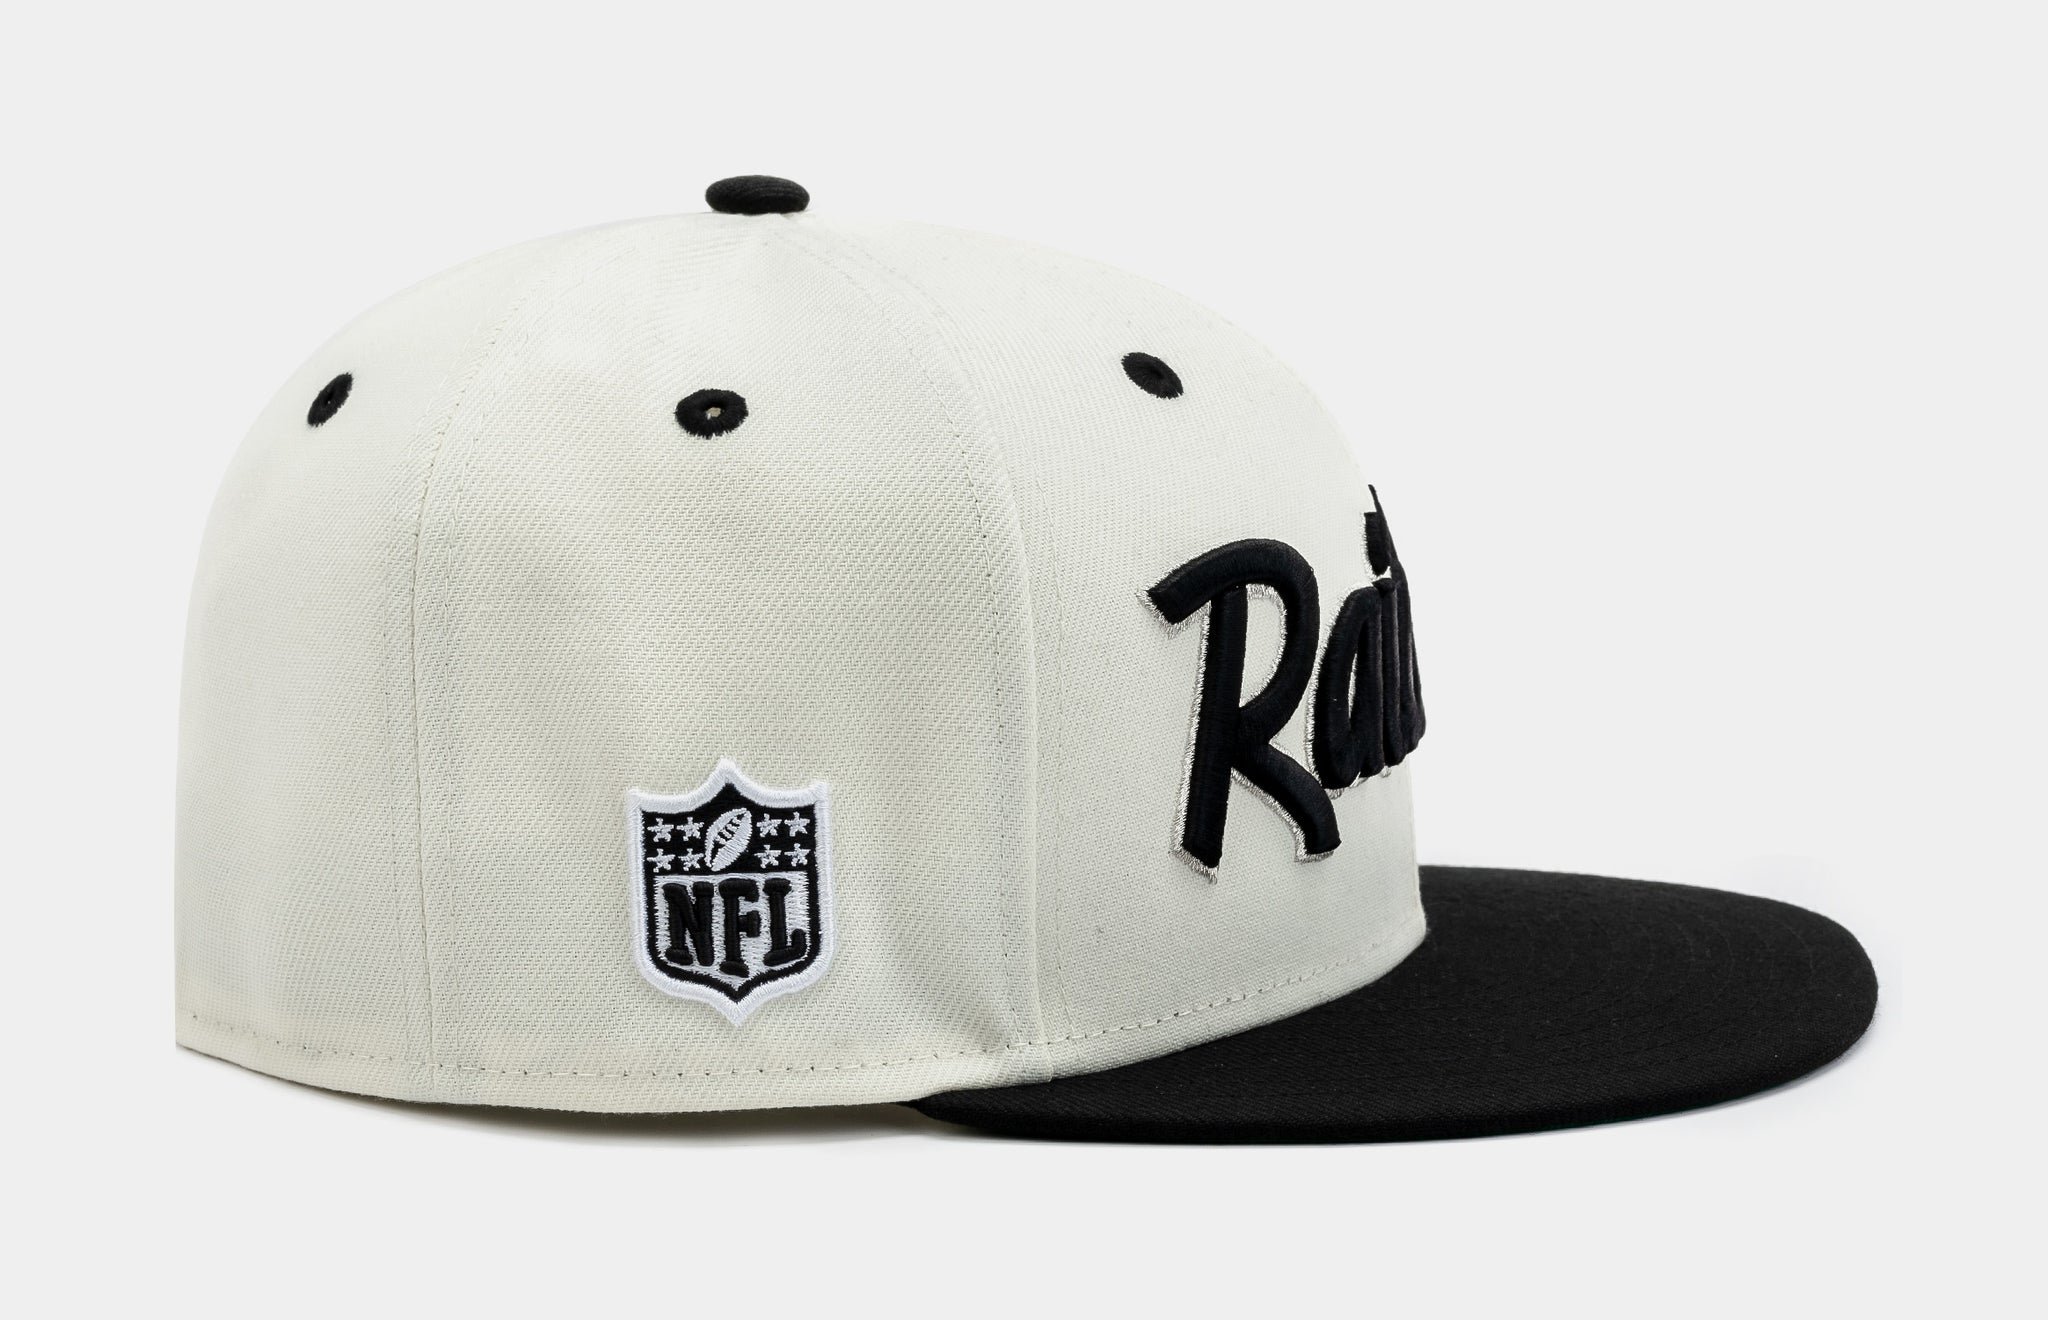 new raiders hat